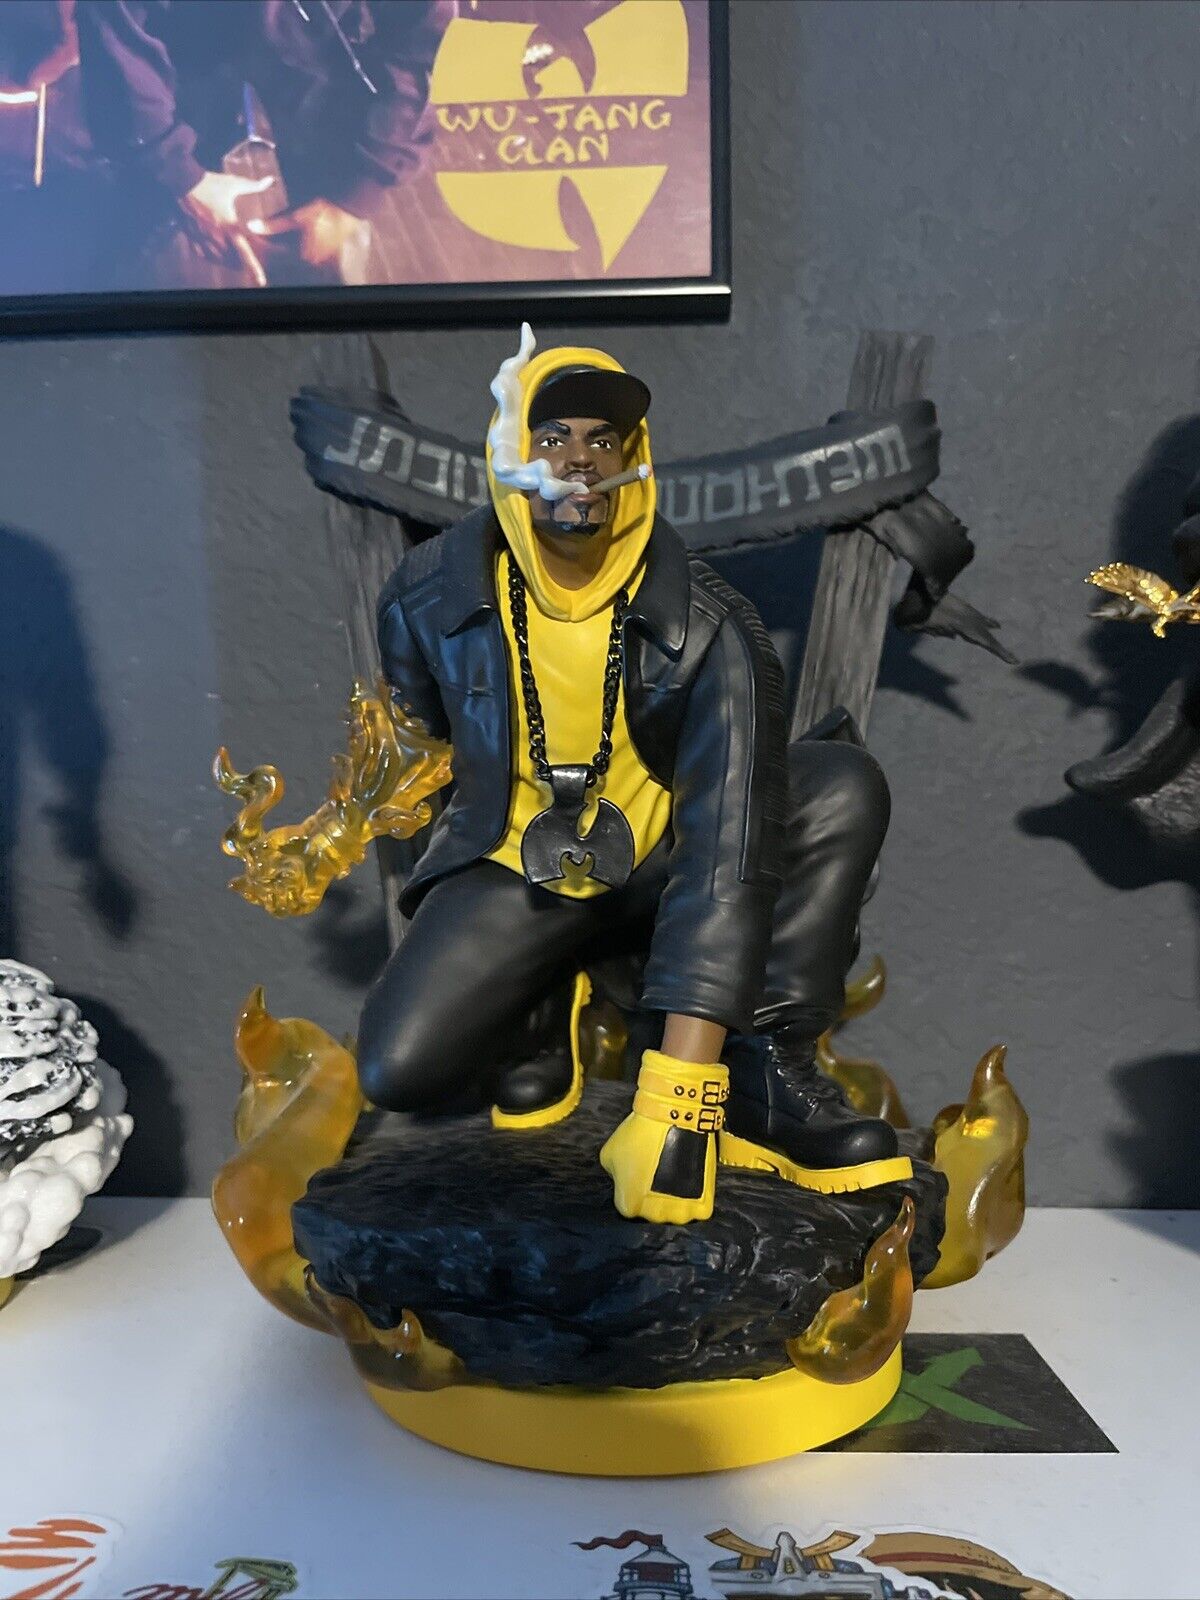 Concrete Jungle Method Man Statue Killa Bee Variant. Super Rare SIGNED